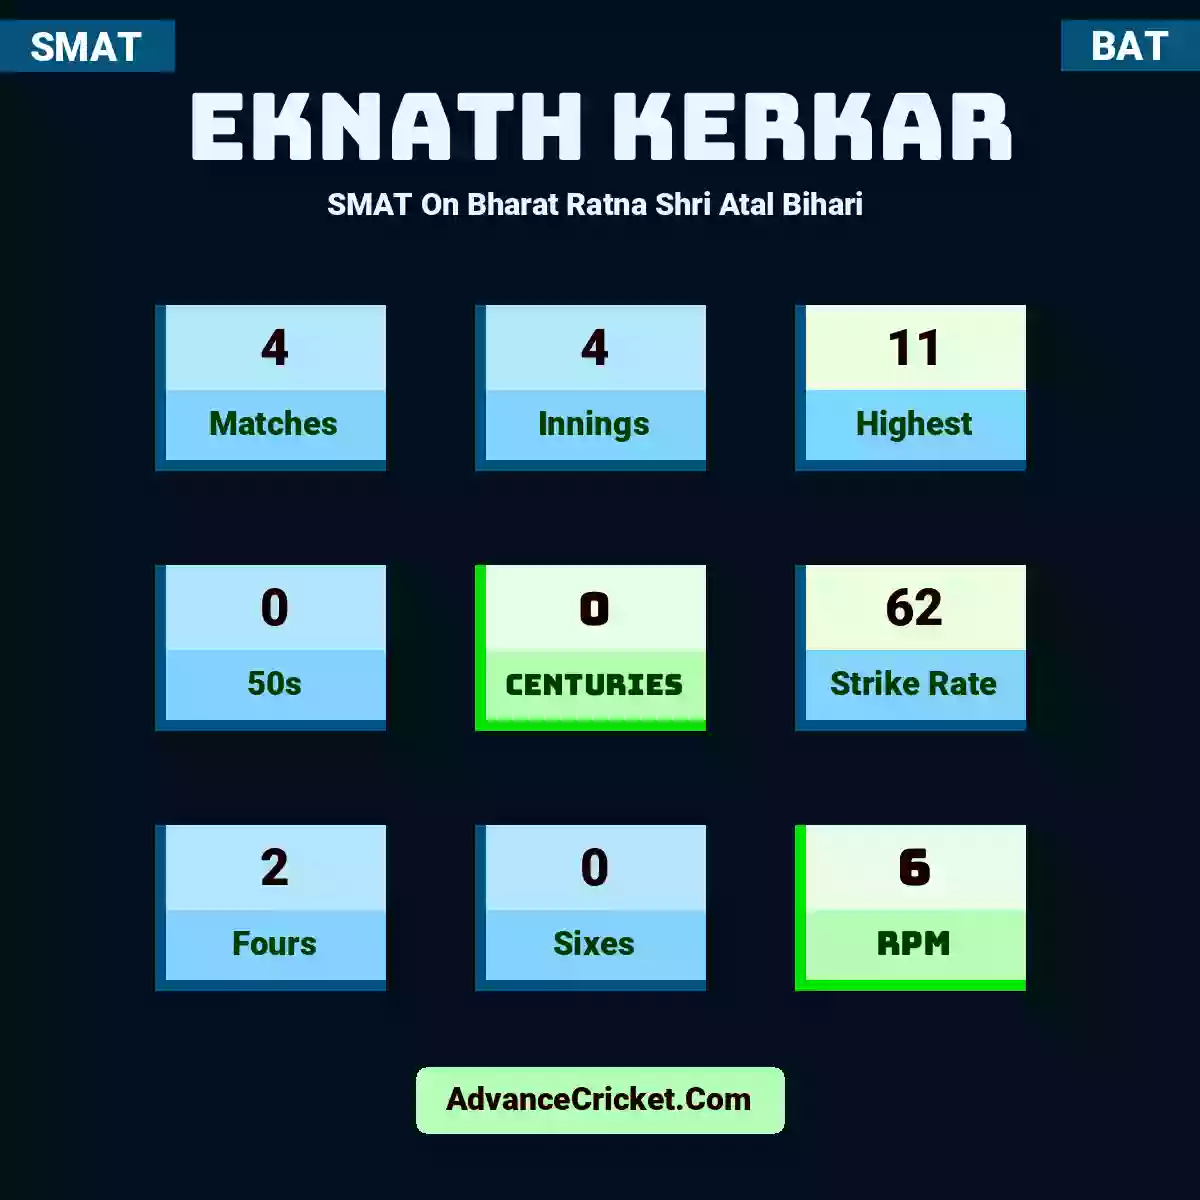 Eknath Kerkar SMAT  On Bharat Ratna Shri Atal Bihari , Eknath Kerkar played 4 matches, scored 11 runs as highest, 0 half-centuries, and 0 centuries, with a strike rate of 62. E.Kerkar hit 2 fours and 0 sixes, with an RPM of 6.